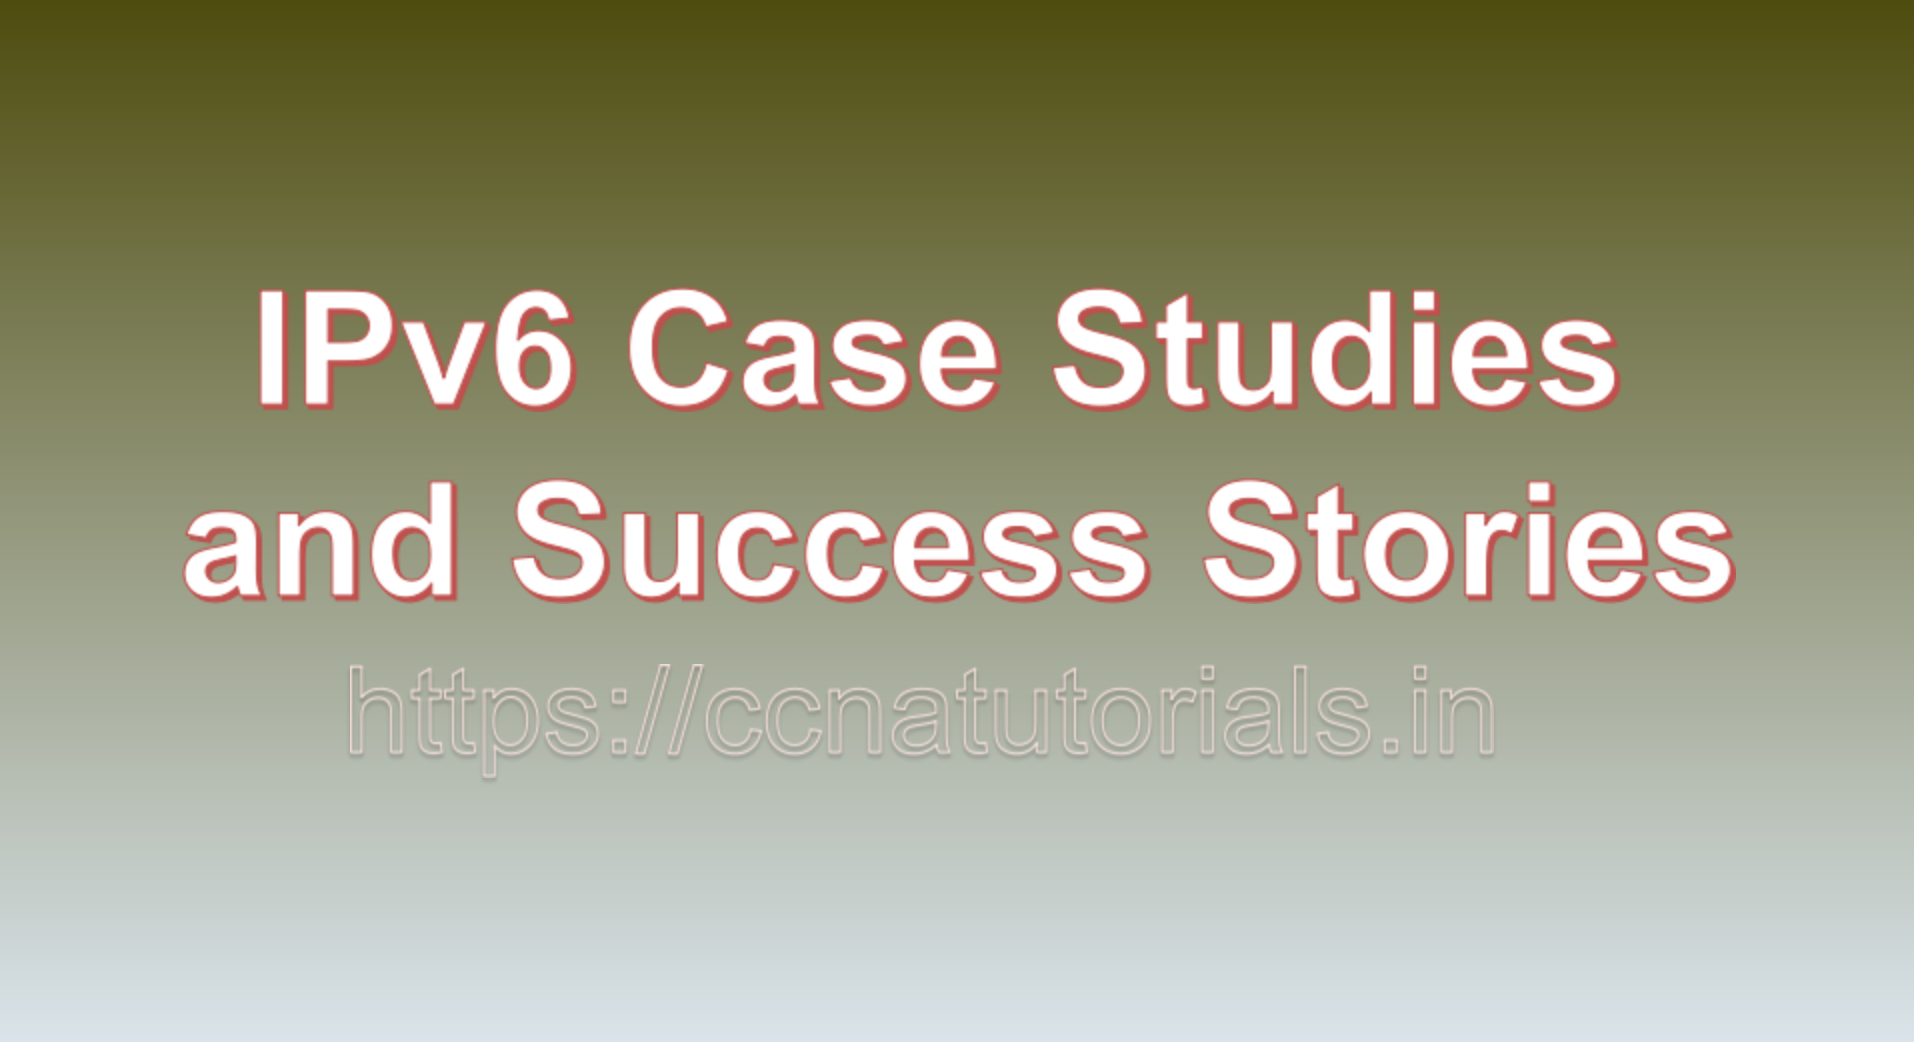 IPv6 Case Studies and Success Stories, ccna, ccna tutorials